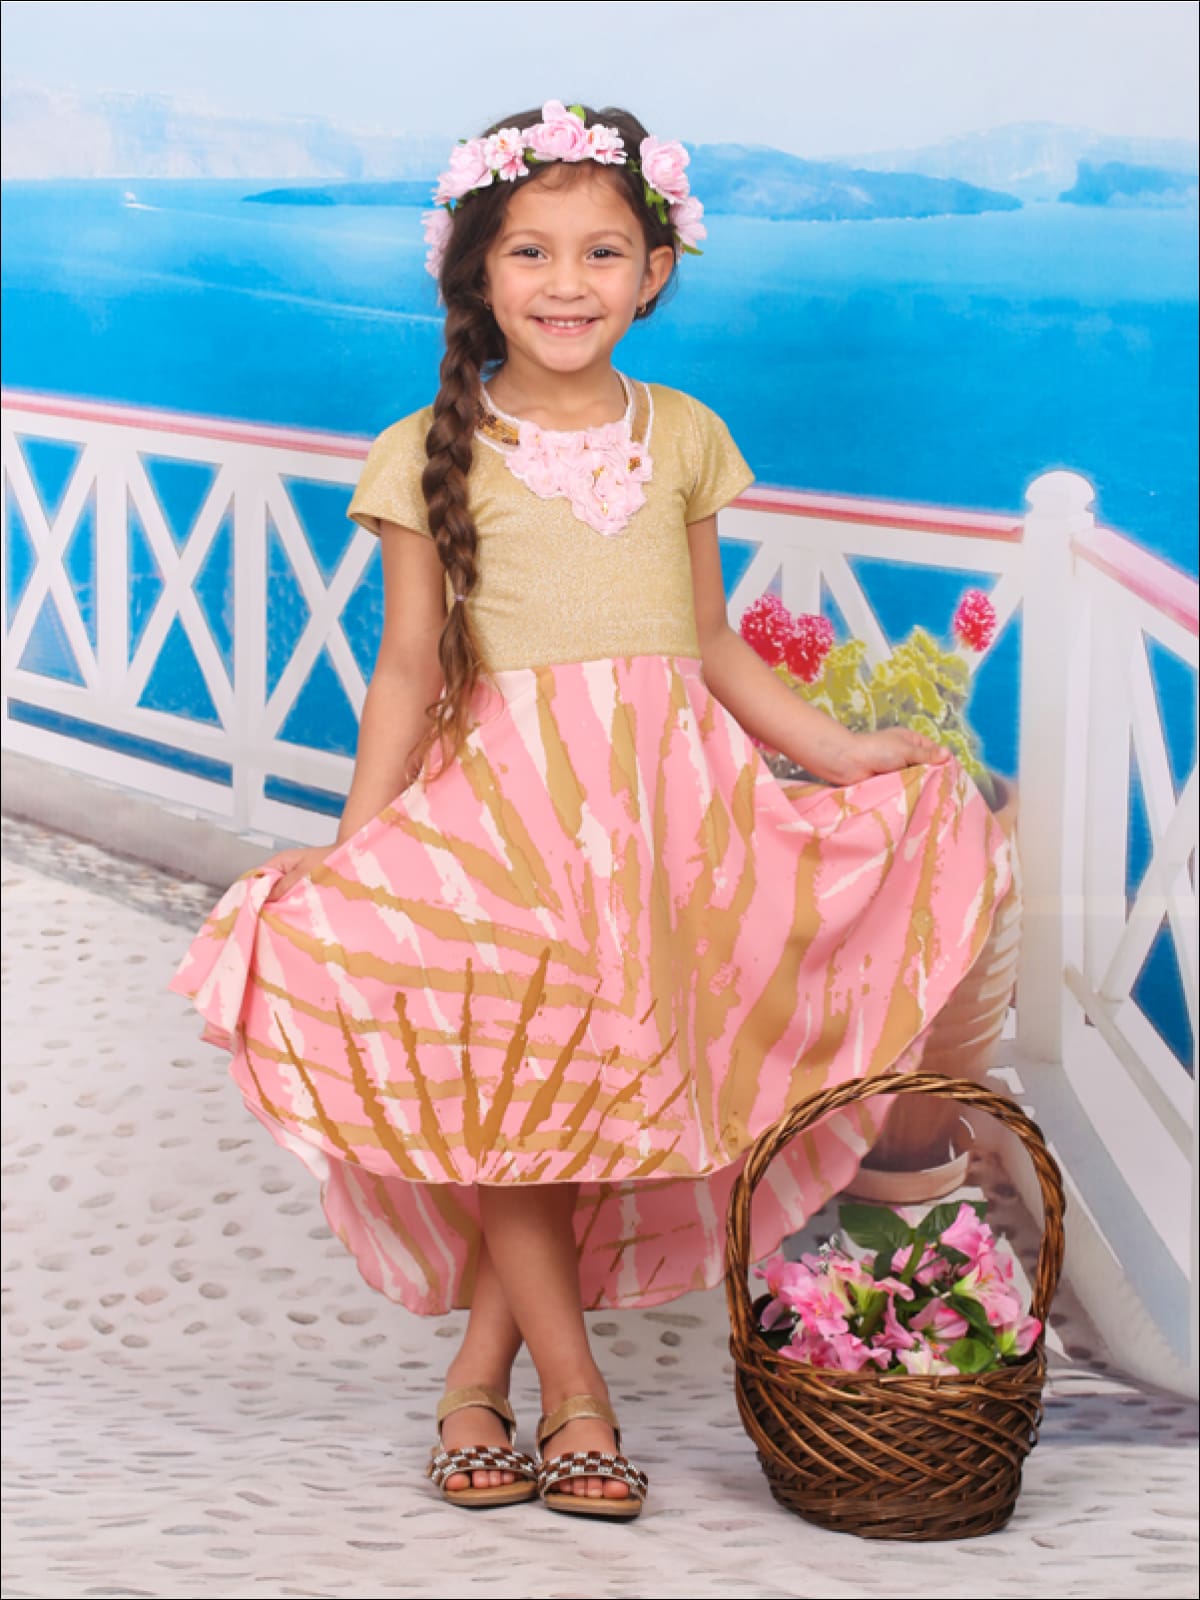 Girls Gold & Pink Short Sleeve Printed Dress with Sequin Flower Neck Detail - Girls Spring Dressy Dress